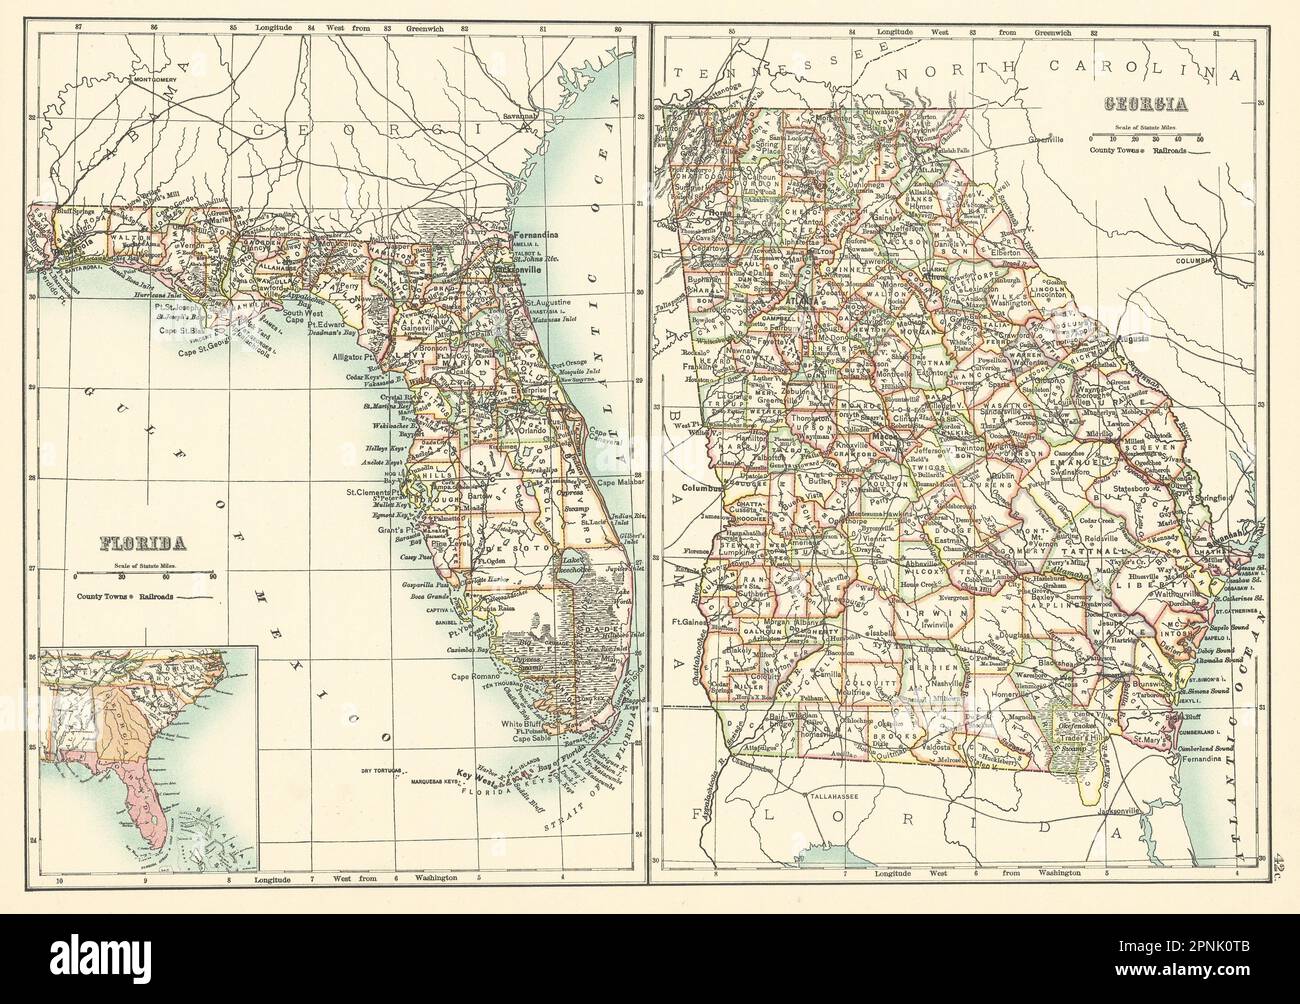 Georgia and Florida state maps showing counties. BARTHOLOMEW 1898 old Stock Photo